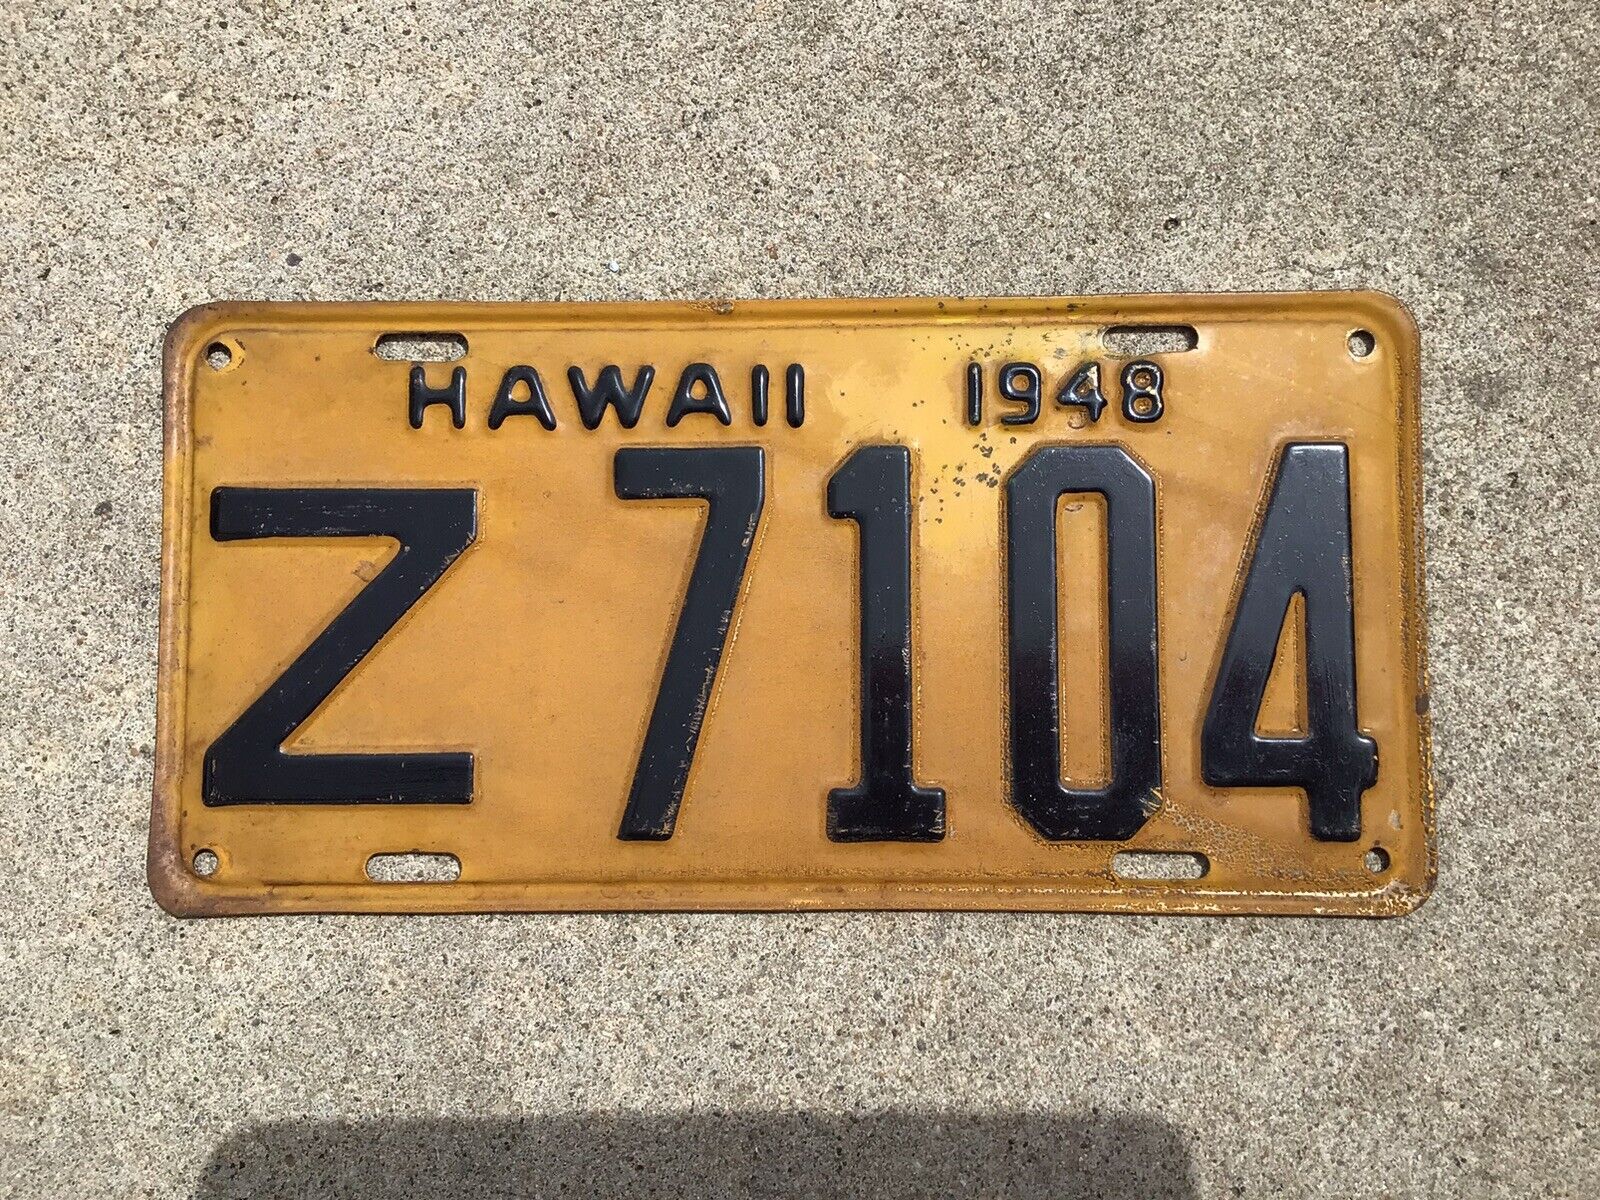 1948 - HAWAII - LICENSE PLATE